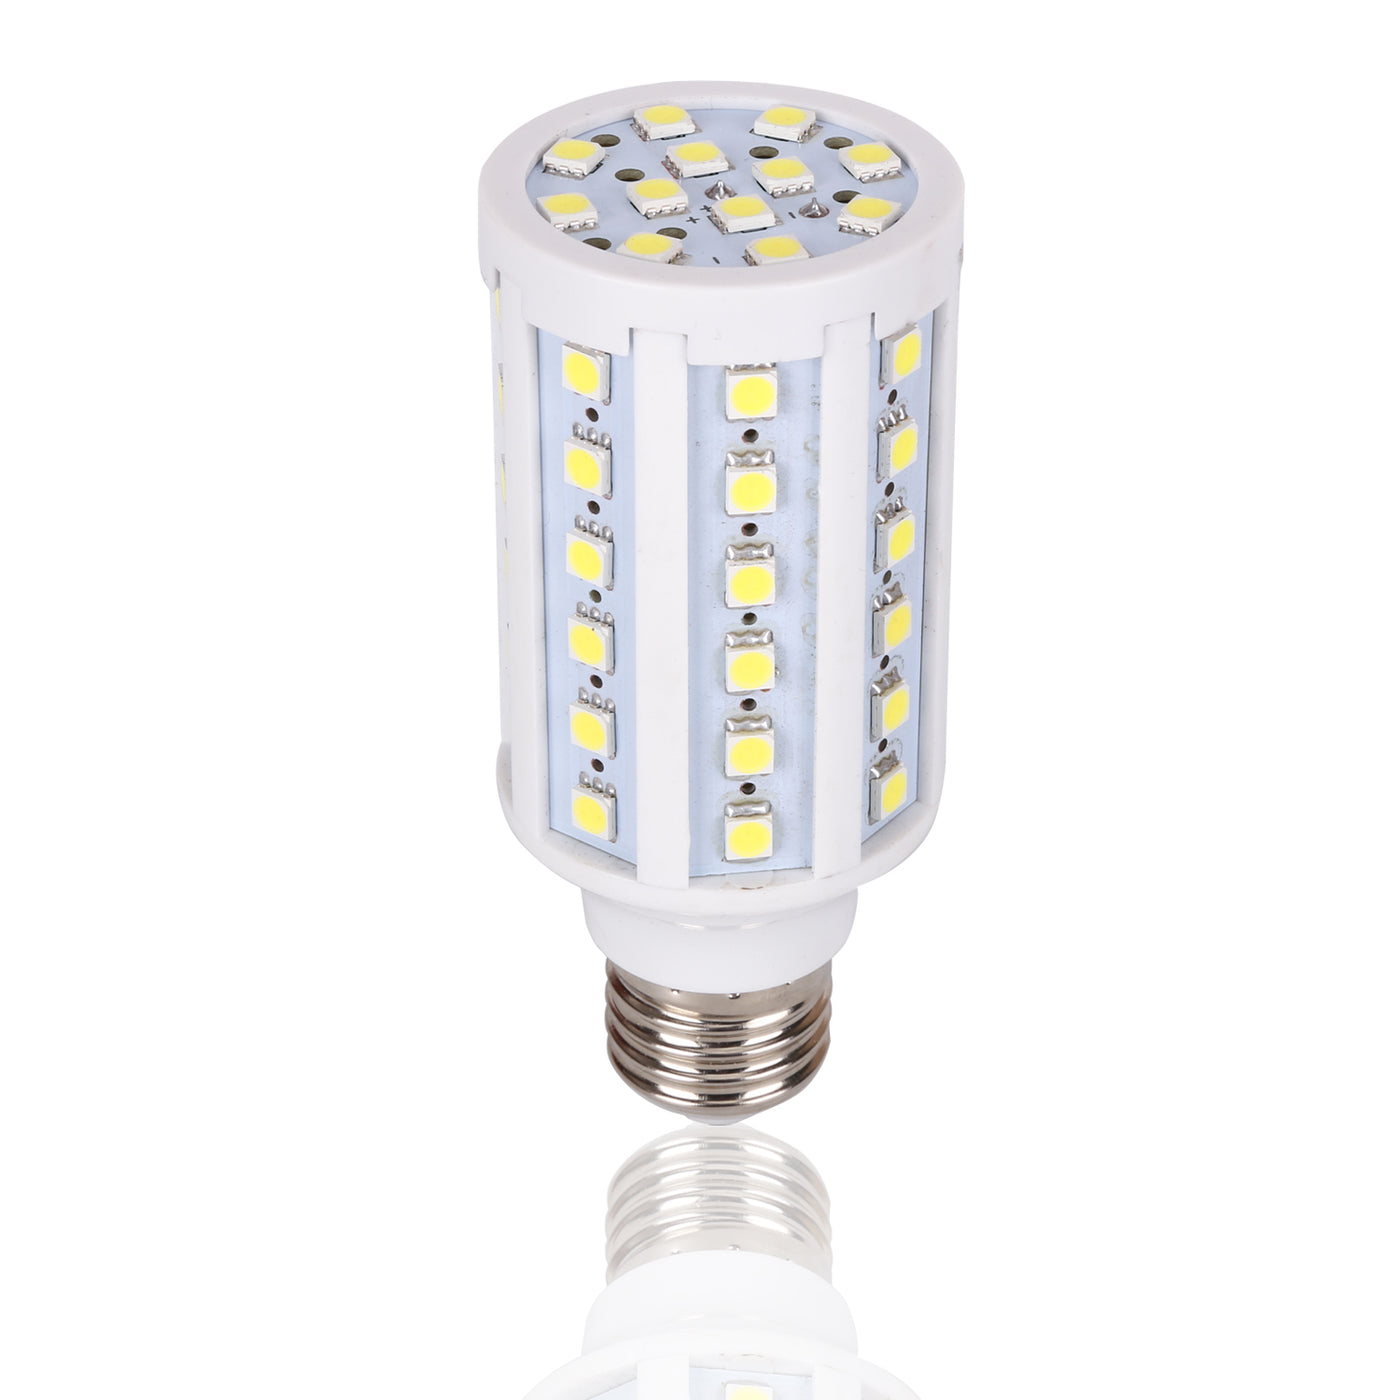 Buy Bright 6W High Power G4 LED Light Bulb, 12 Volt DC